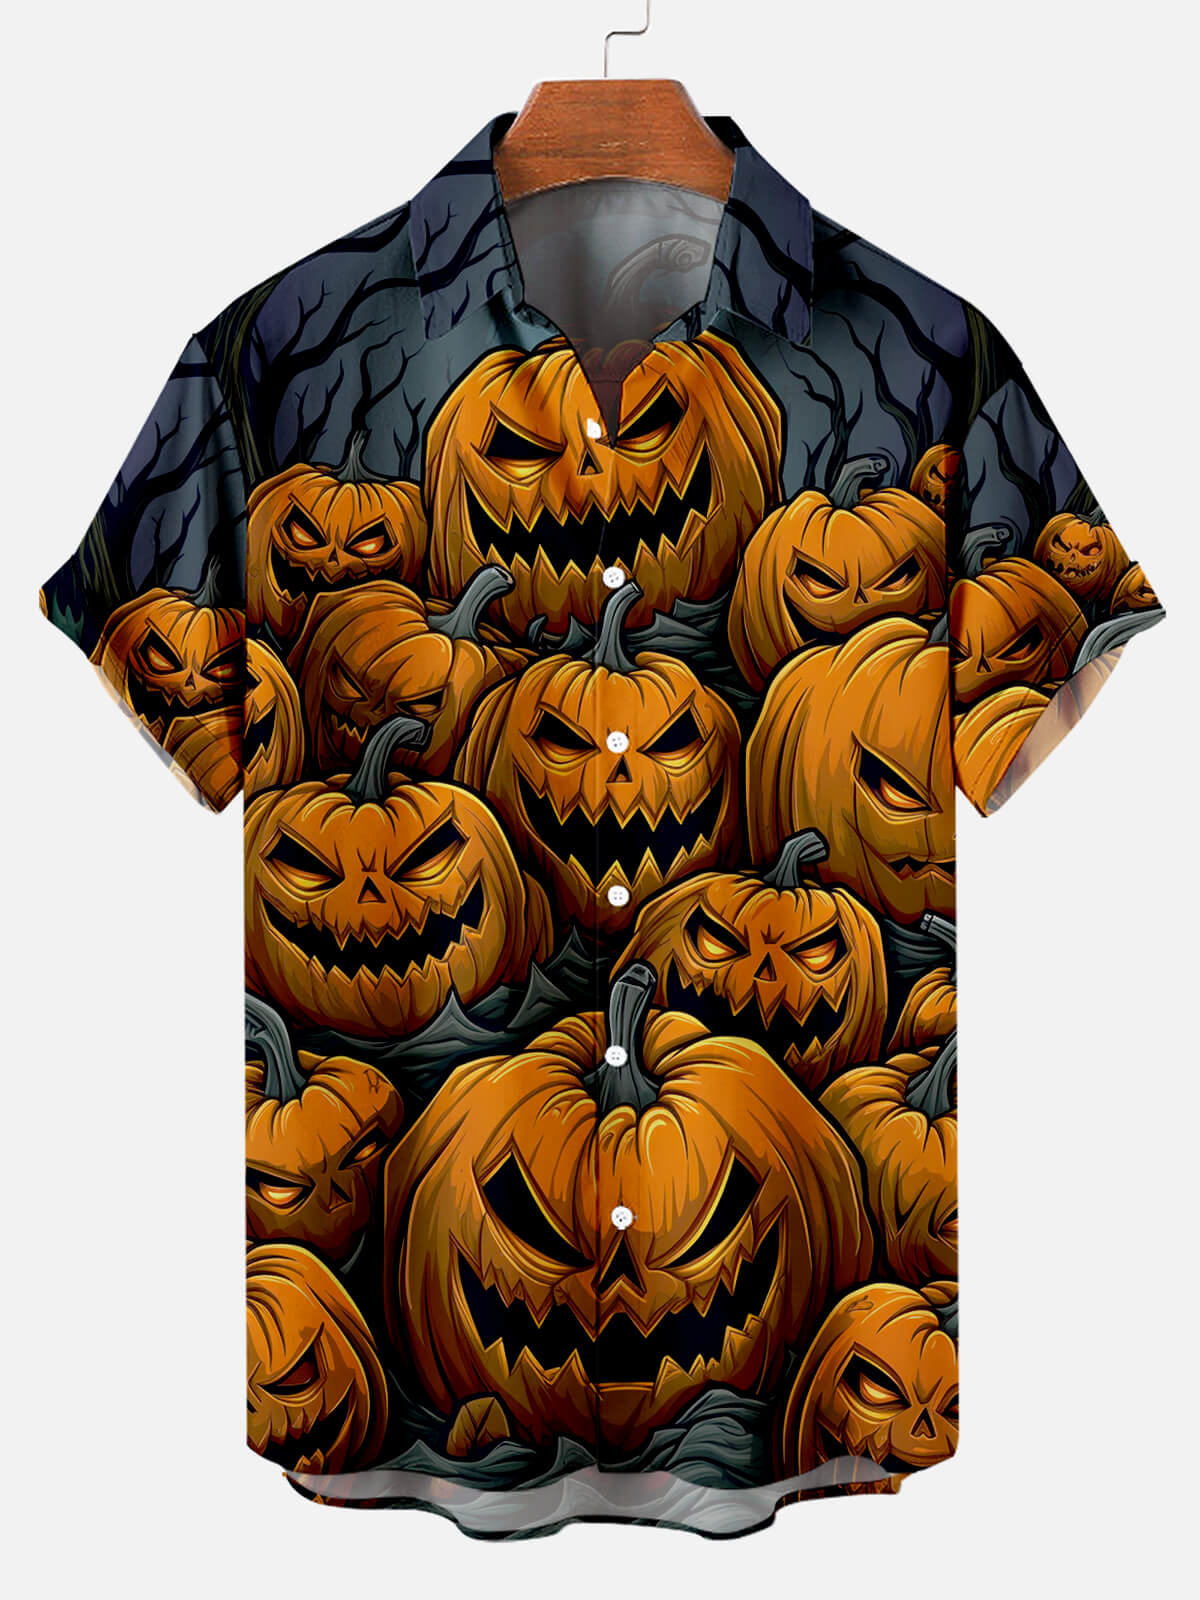 Halloween Pumpkin Illustration Men's Short Sleeve Shirt